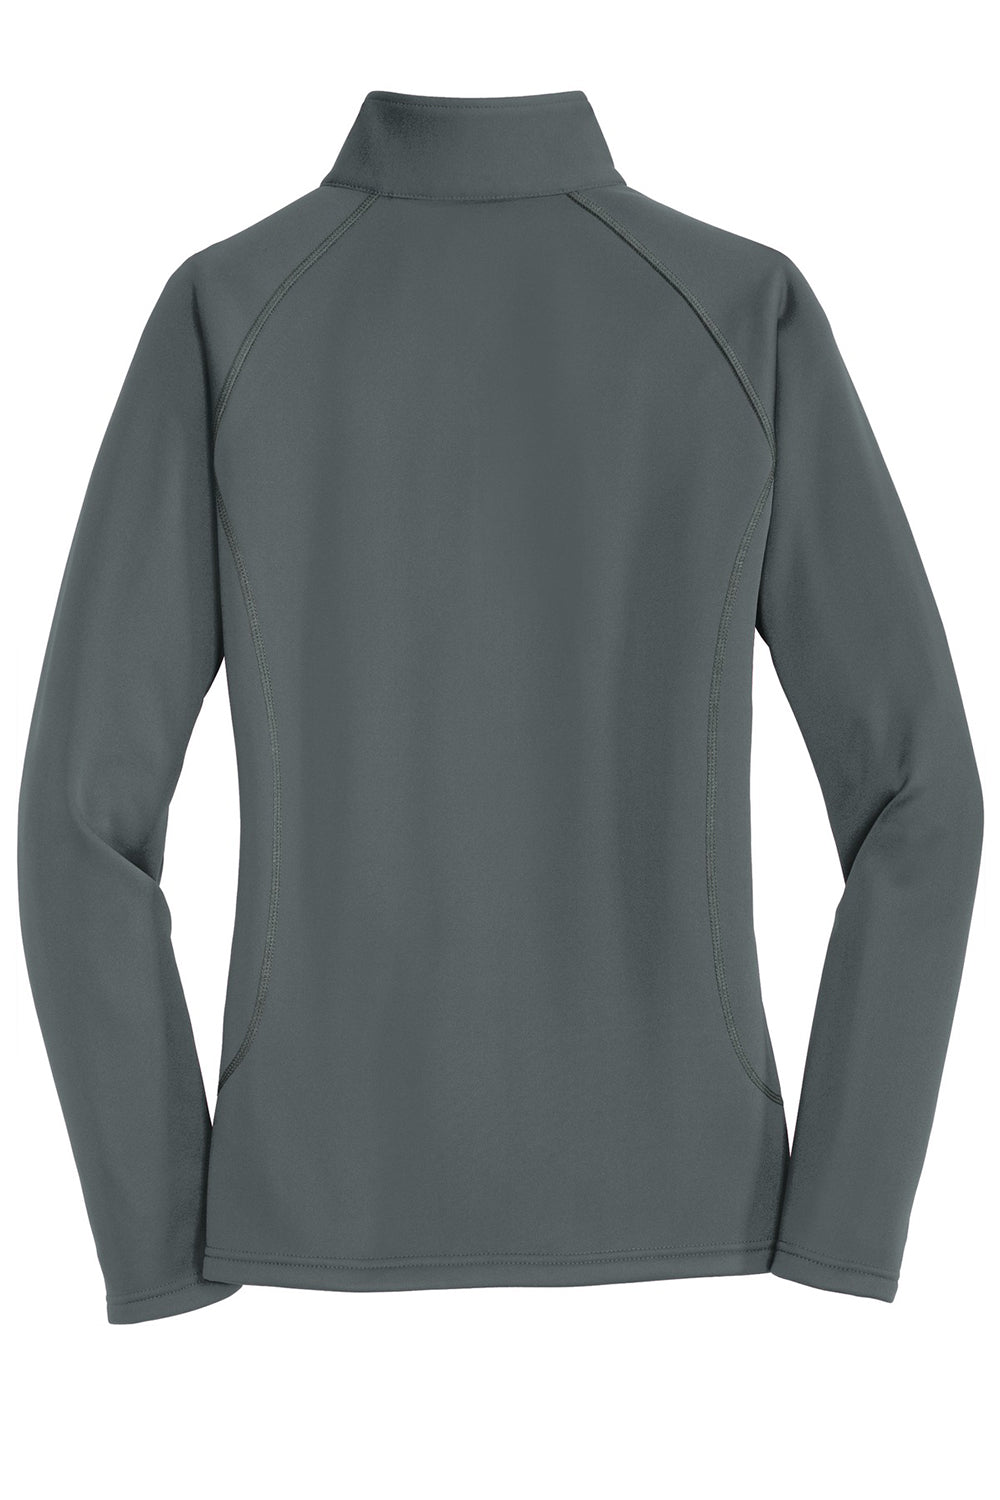 Eddie Bauer EB237 Womens Smooth Fleece 1/4 Zip Sweatshirt Iron Grey Flat Back